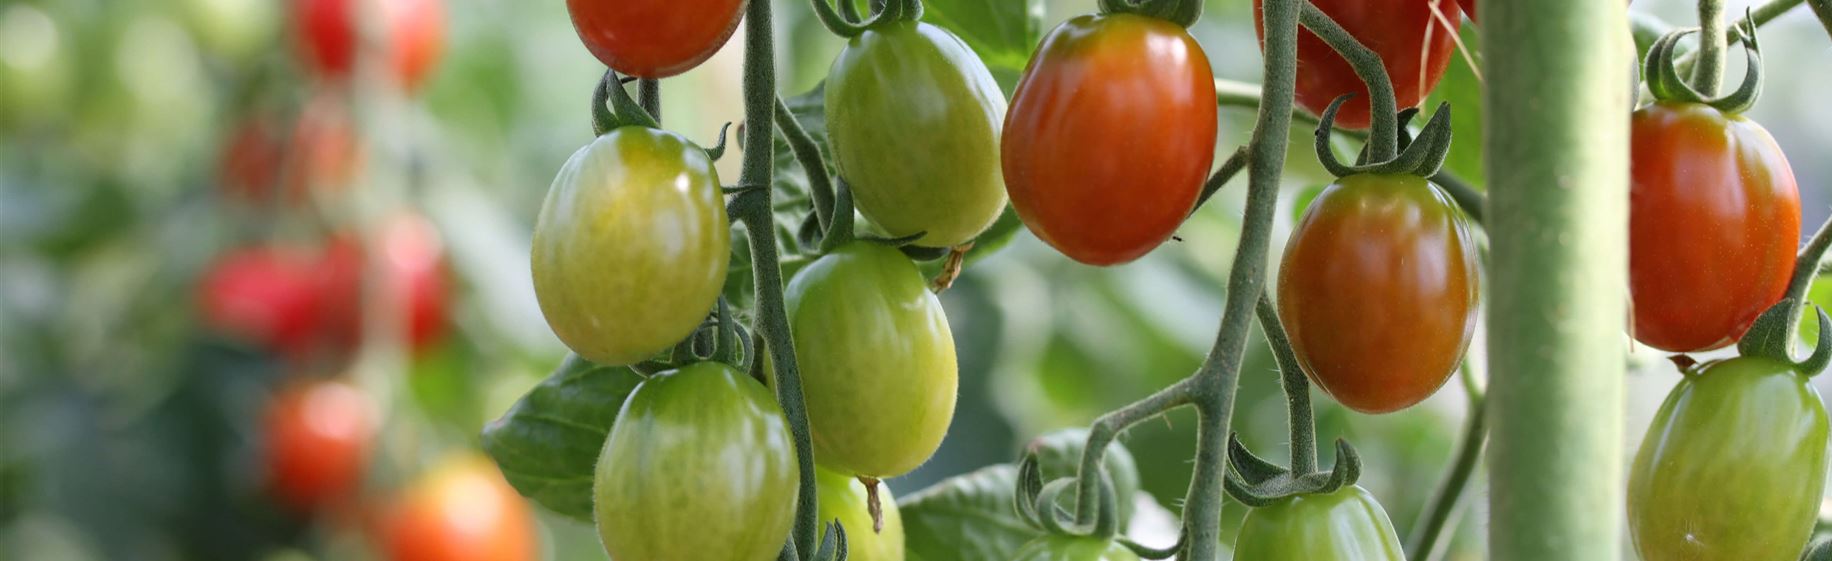 Veredelung bei Tomaten.jpg